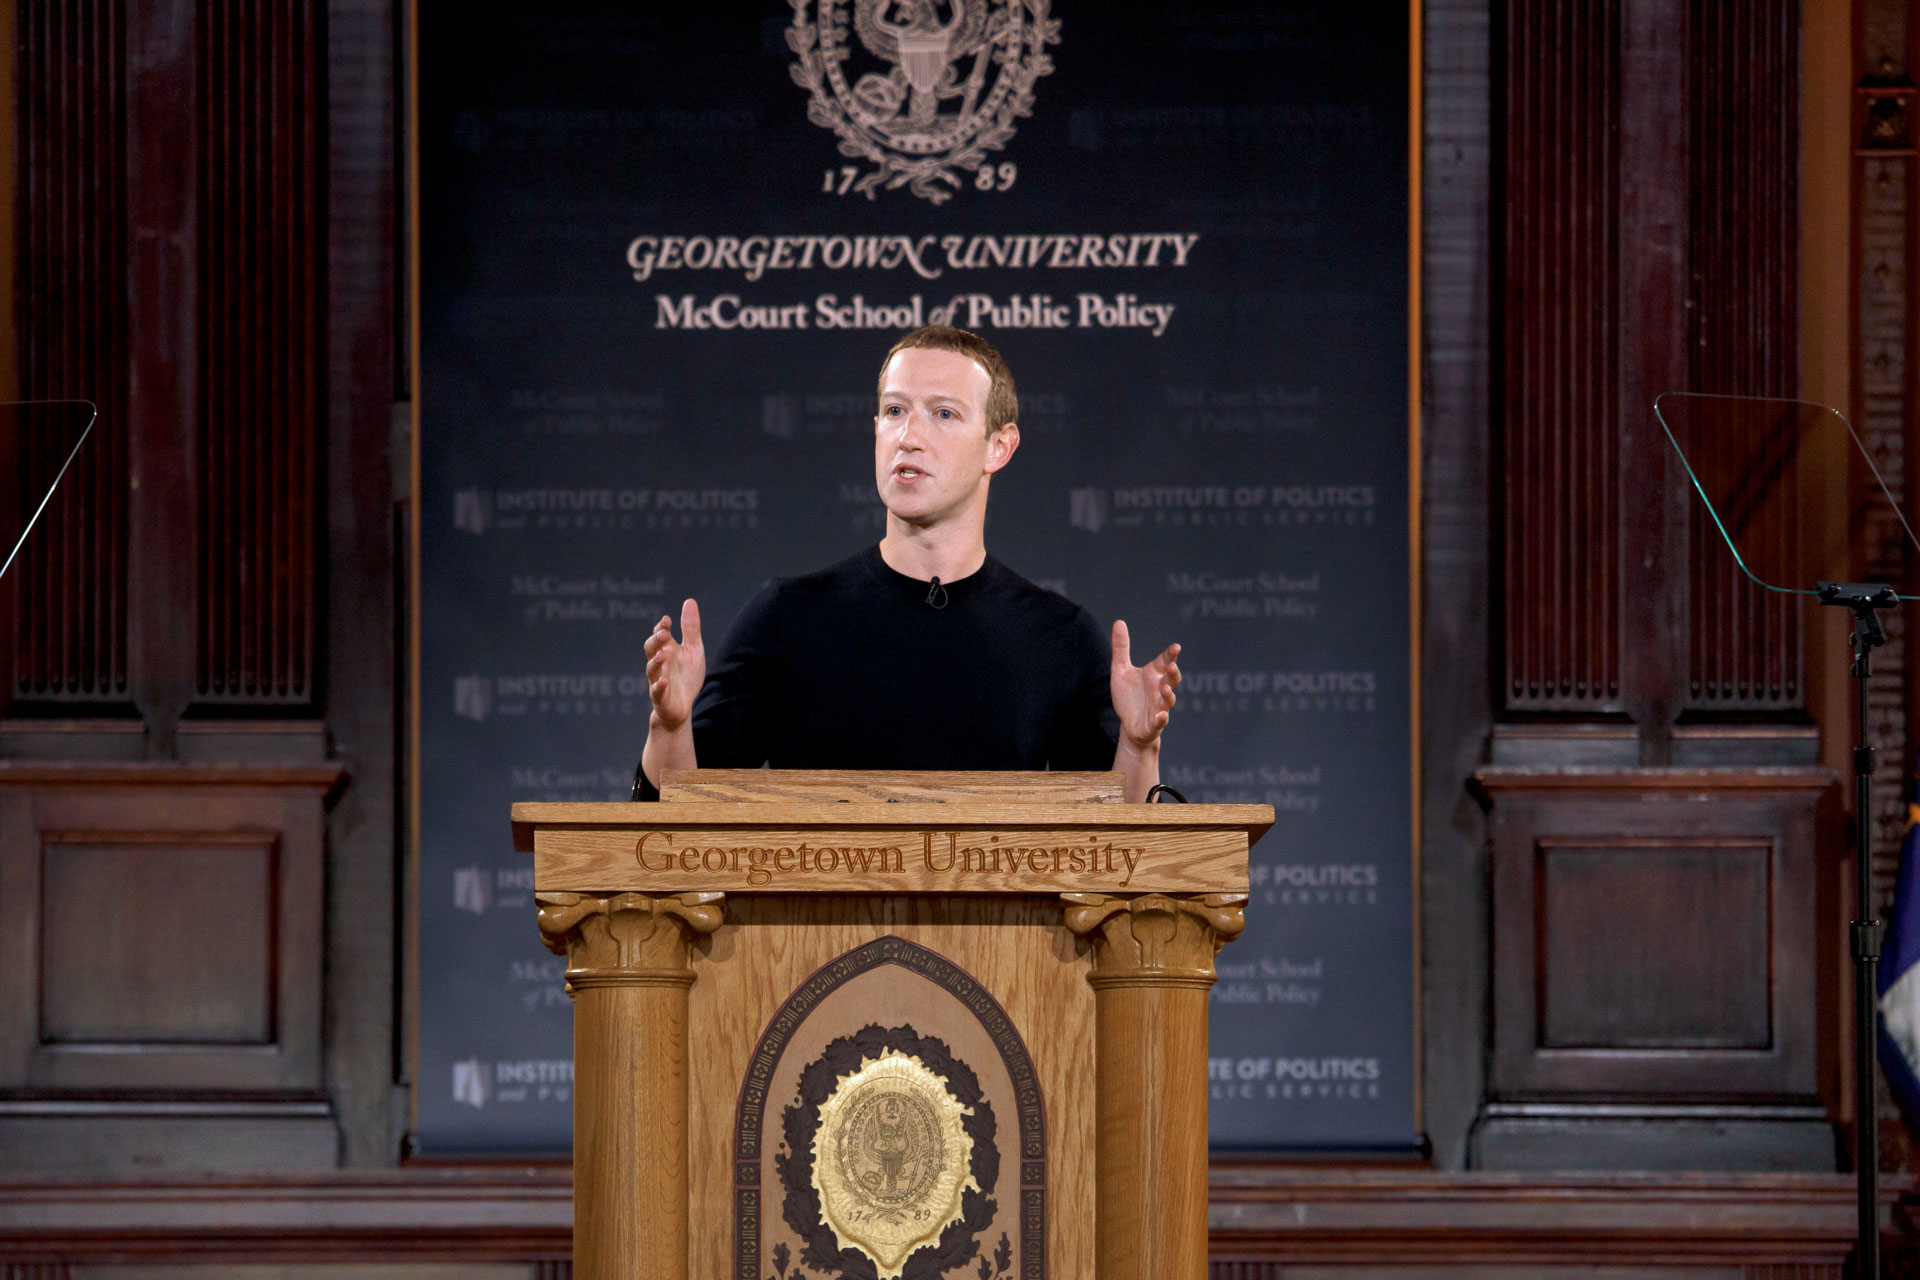 Mark Zuckerberg in black shirt onstage behind podium delivering speech